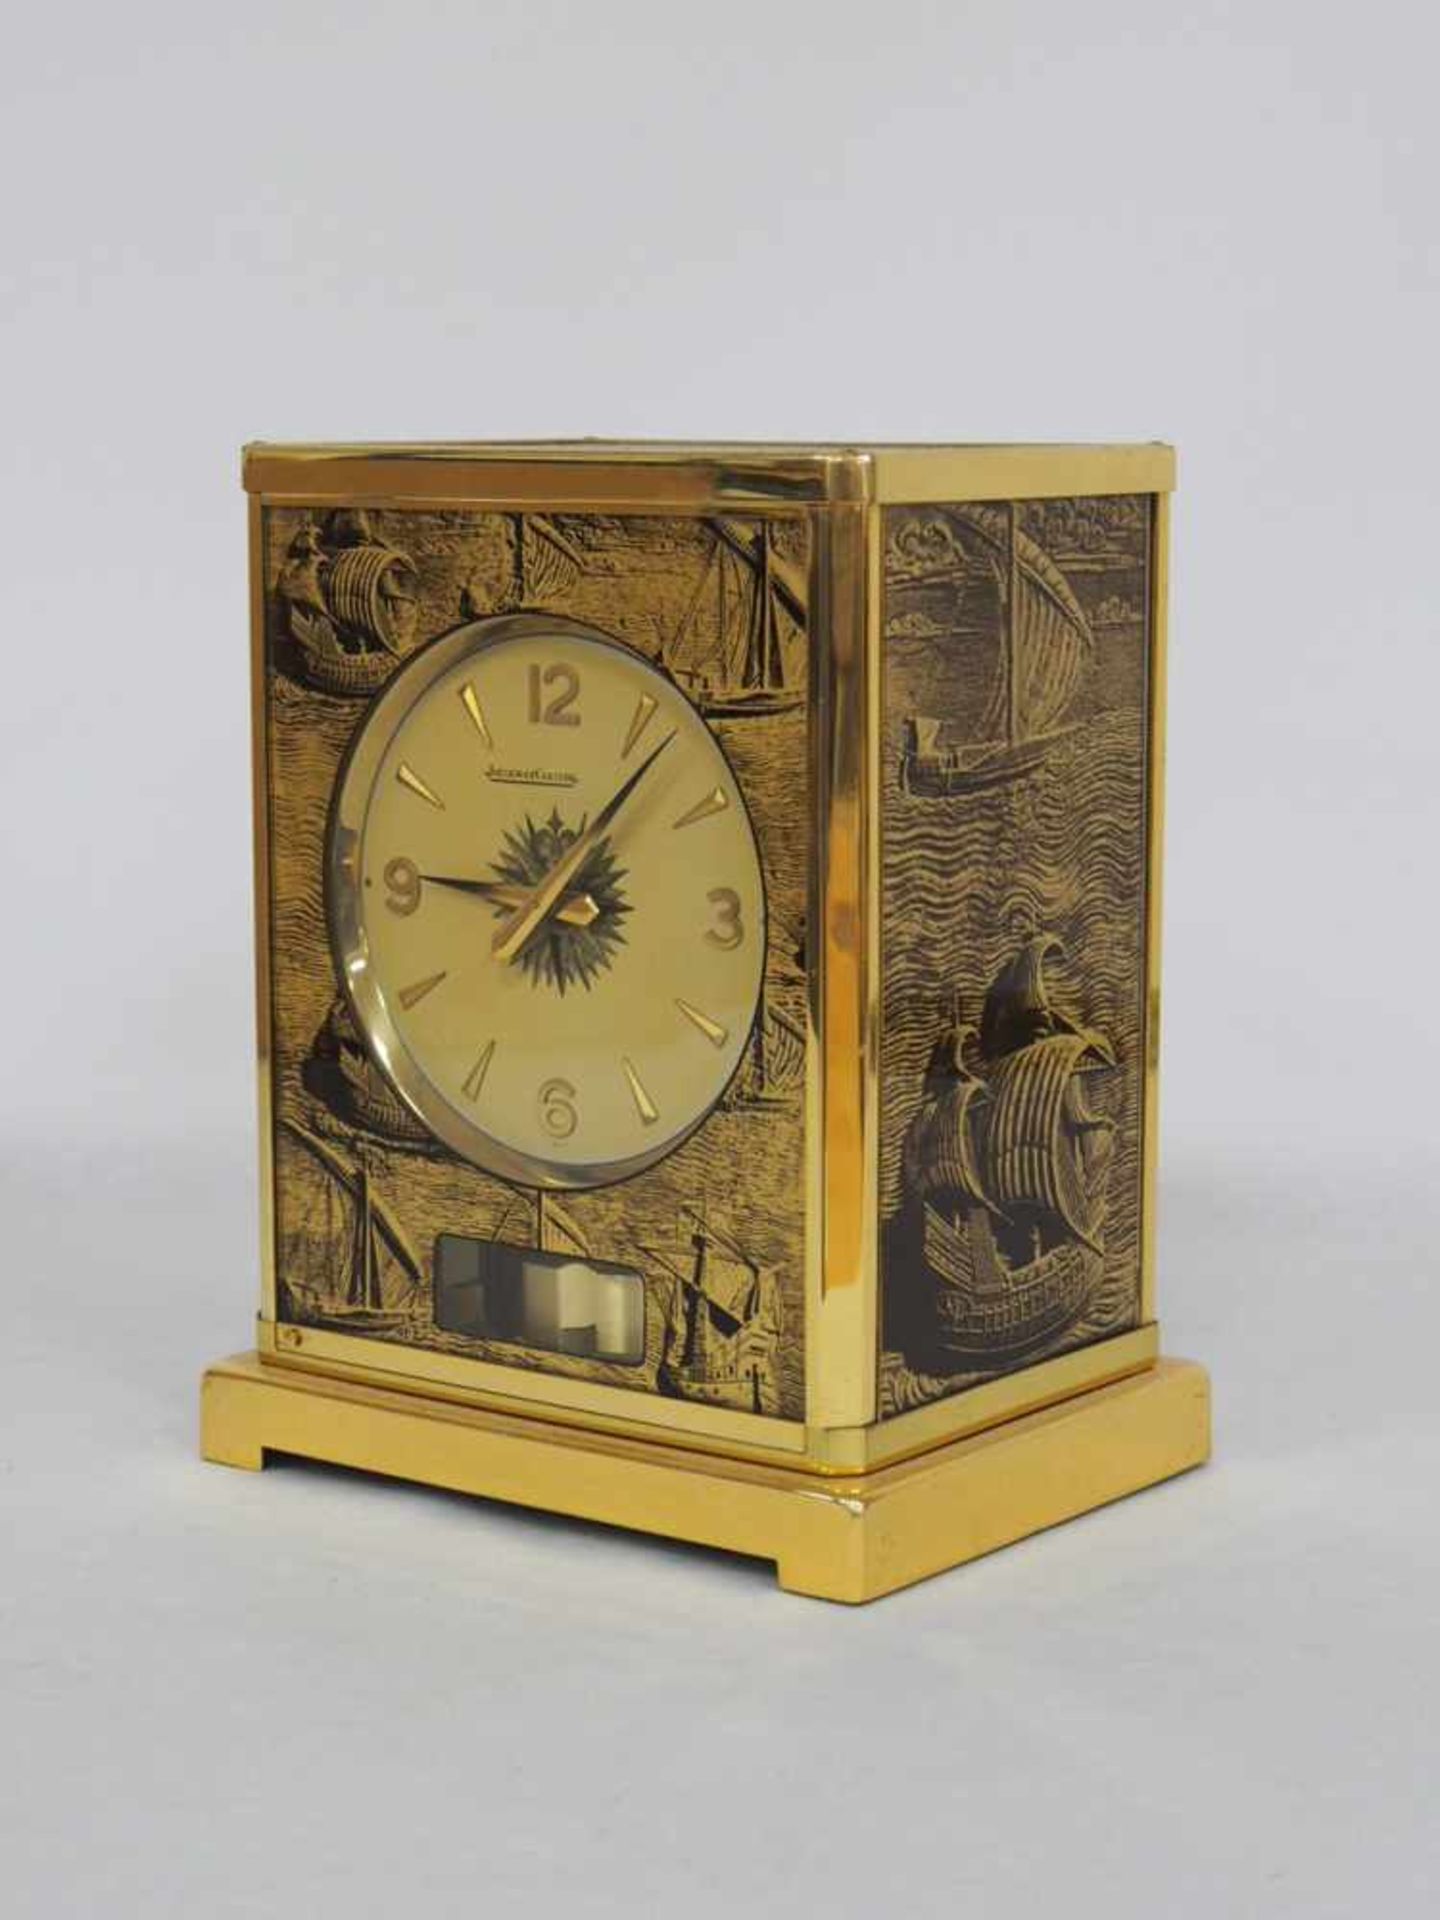 PenduleJaeger-Le Coultre, Atmos, 22 x 16,5 x 14 cm, Uhrwerk läuft nicht, Reparaturanleitung liegt - Bild 2 aus 2